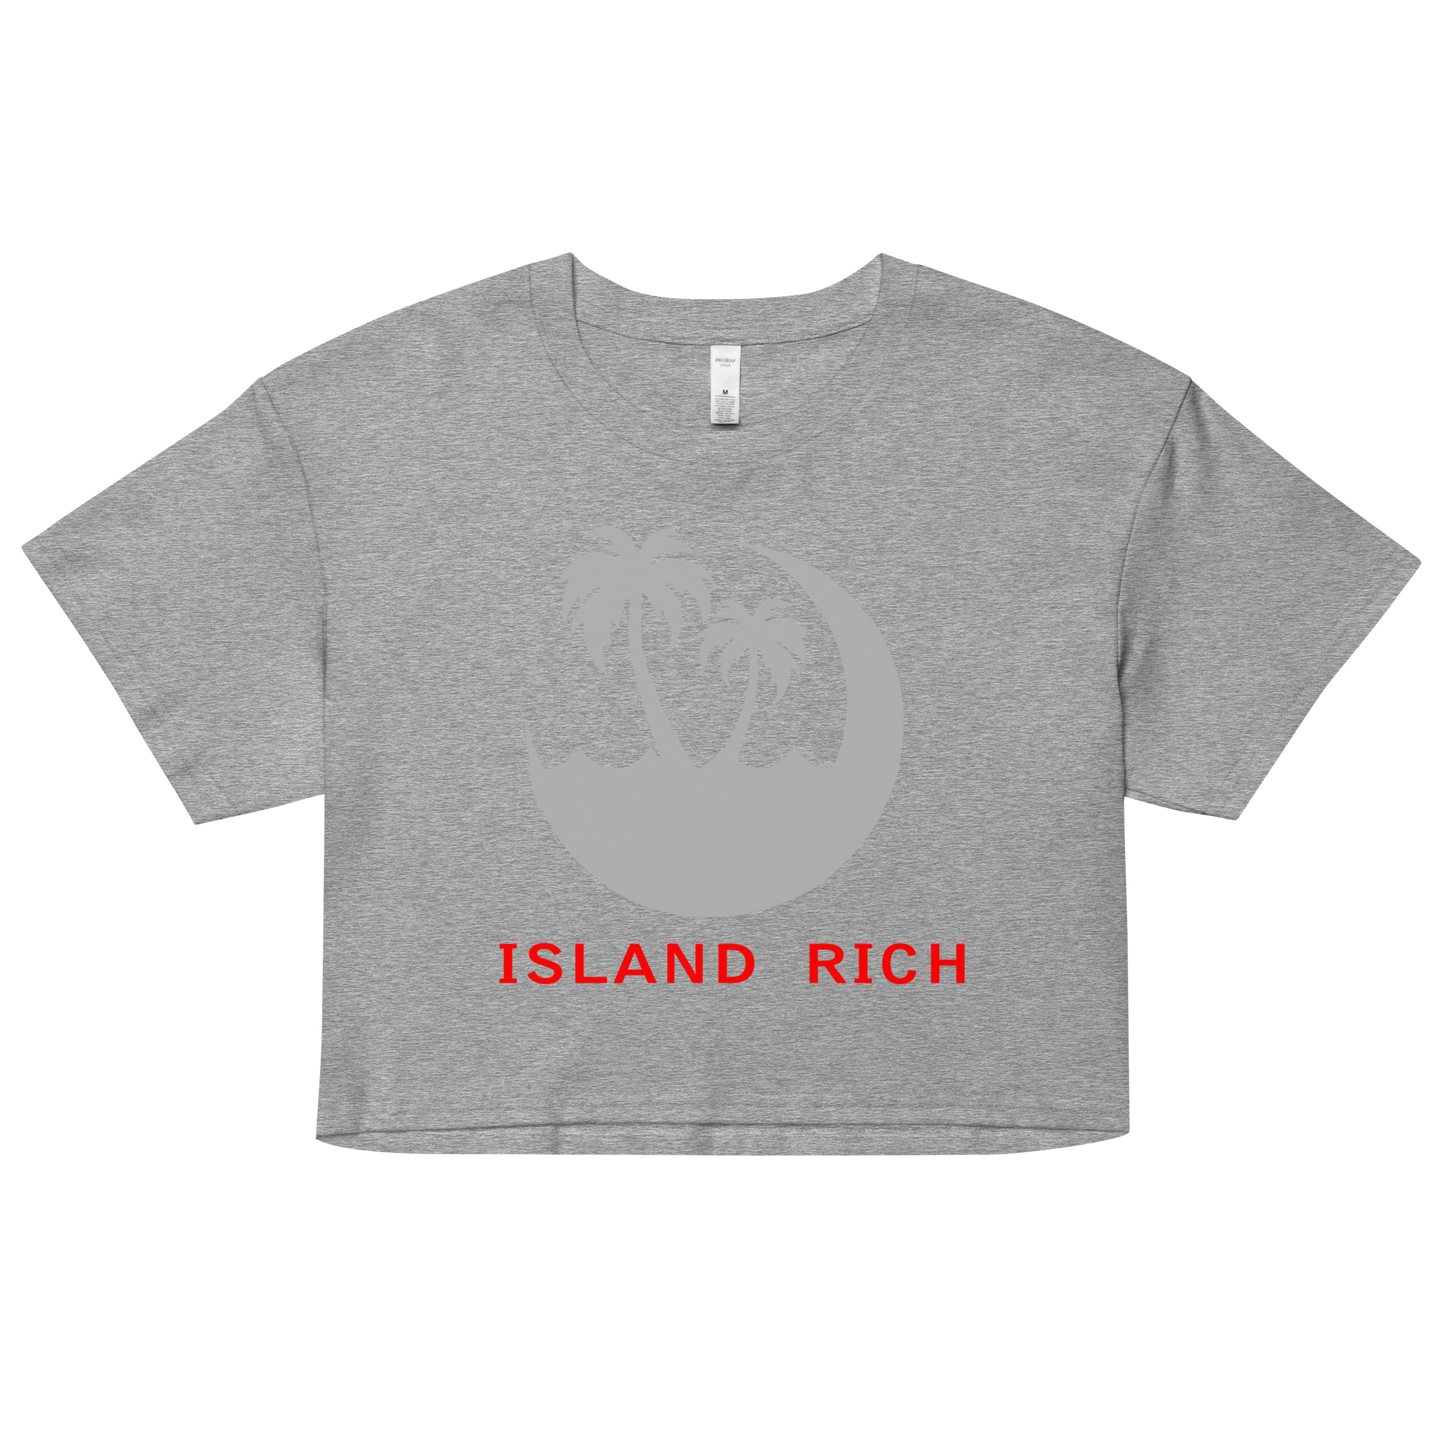 Island rich Women’s crop top